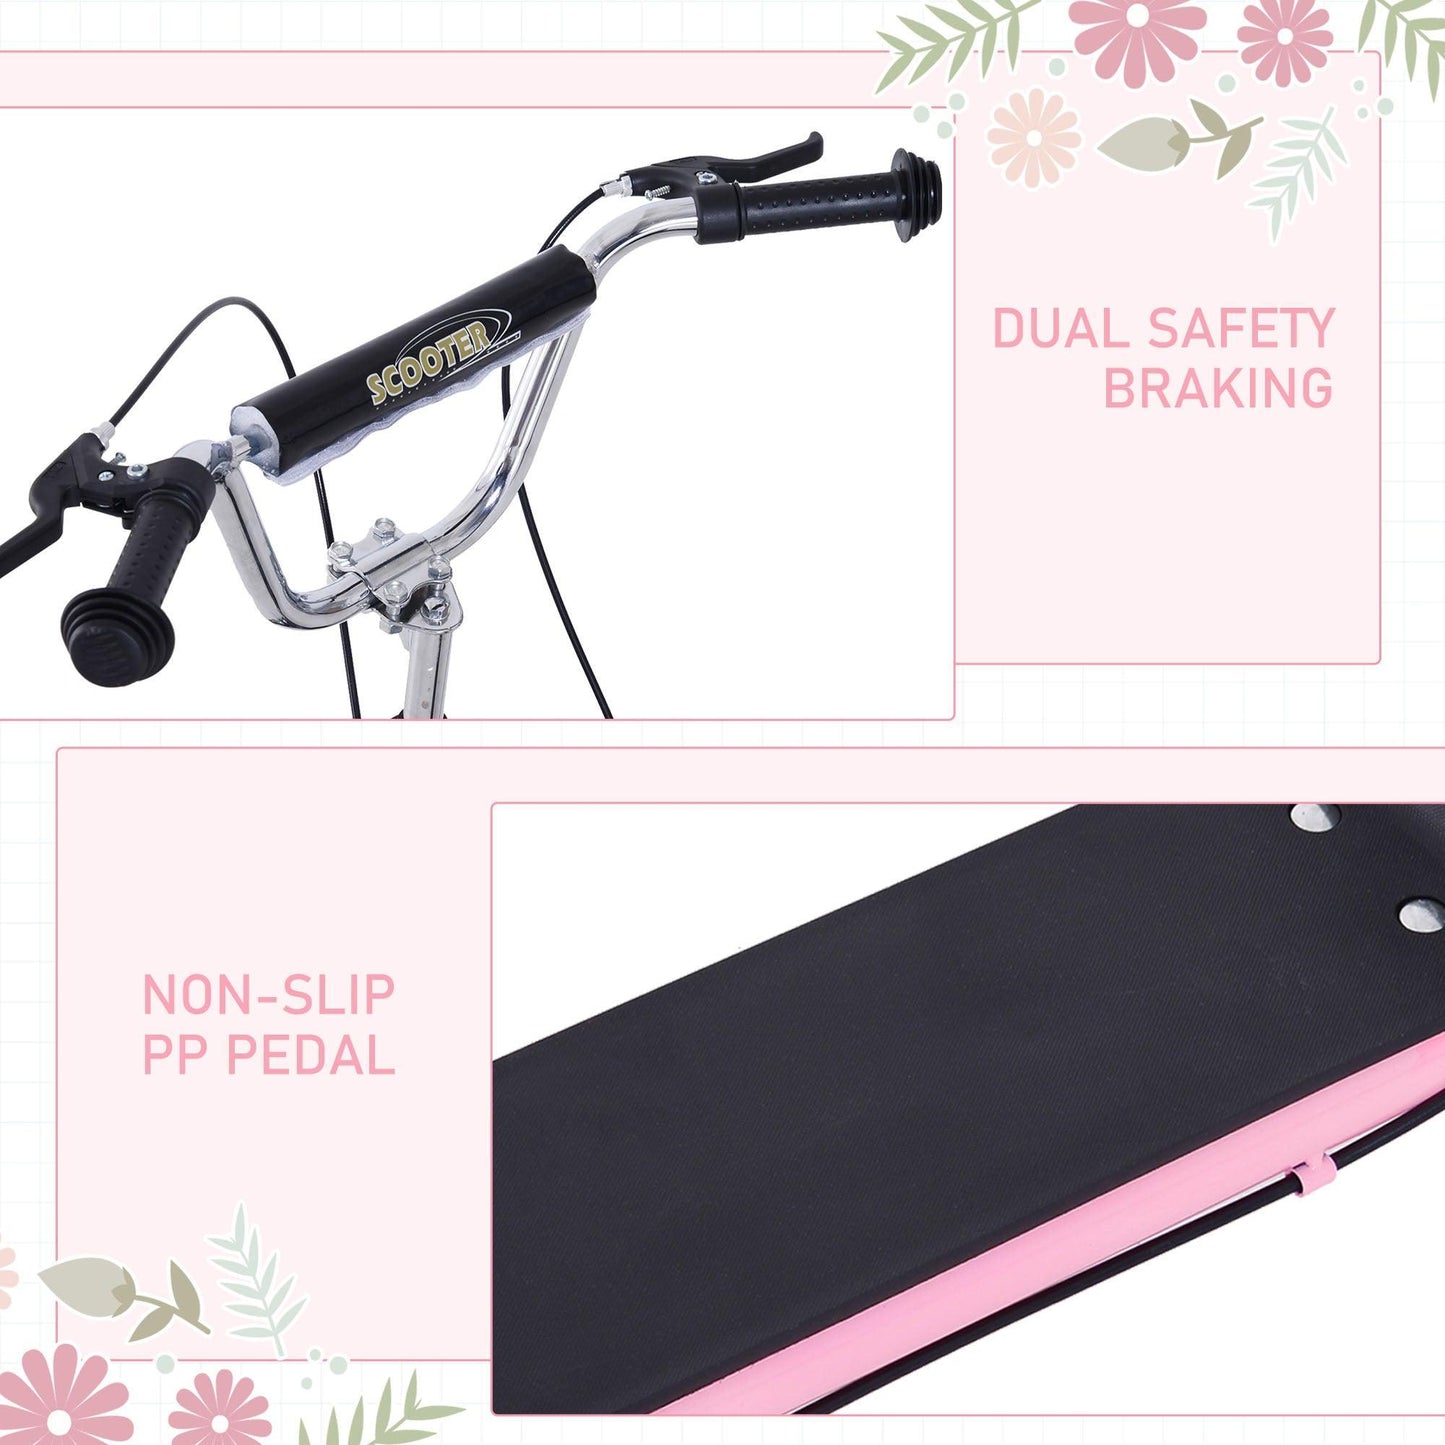 HOMCOM Kids' Scooter: Adjustable Handlebar, Dual Brakes, Pink - ALL4U RETAILER LTD